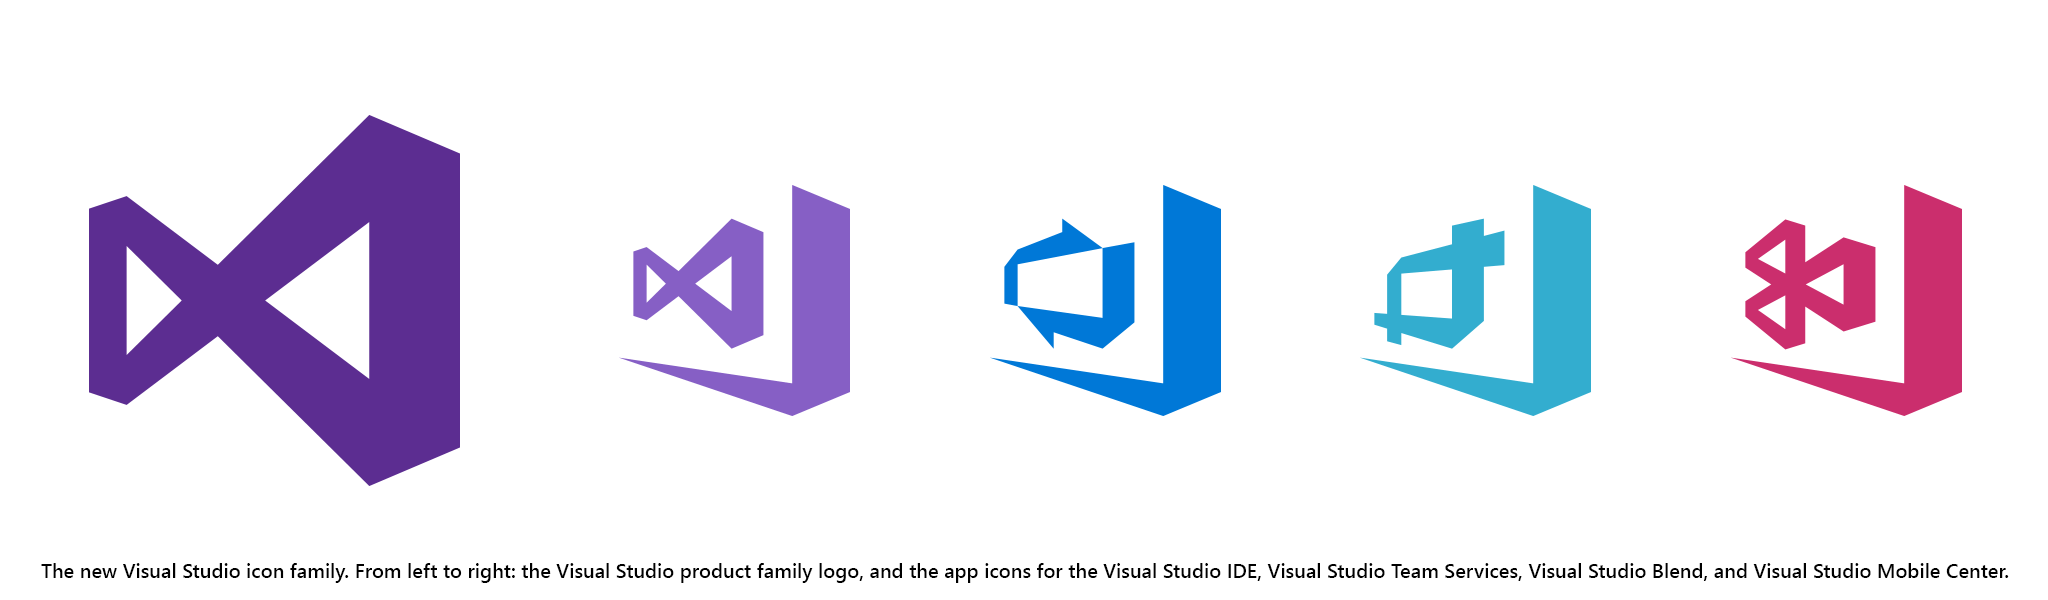 Visual Basic Logo - Iterations on infinity | The Visual Studio Blog